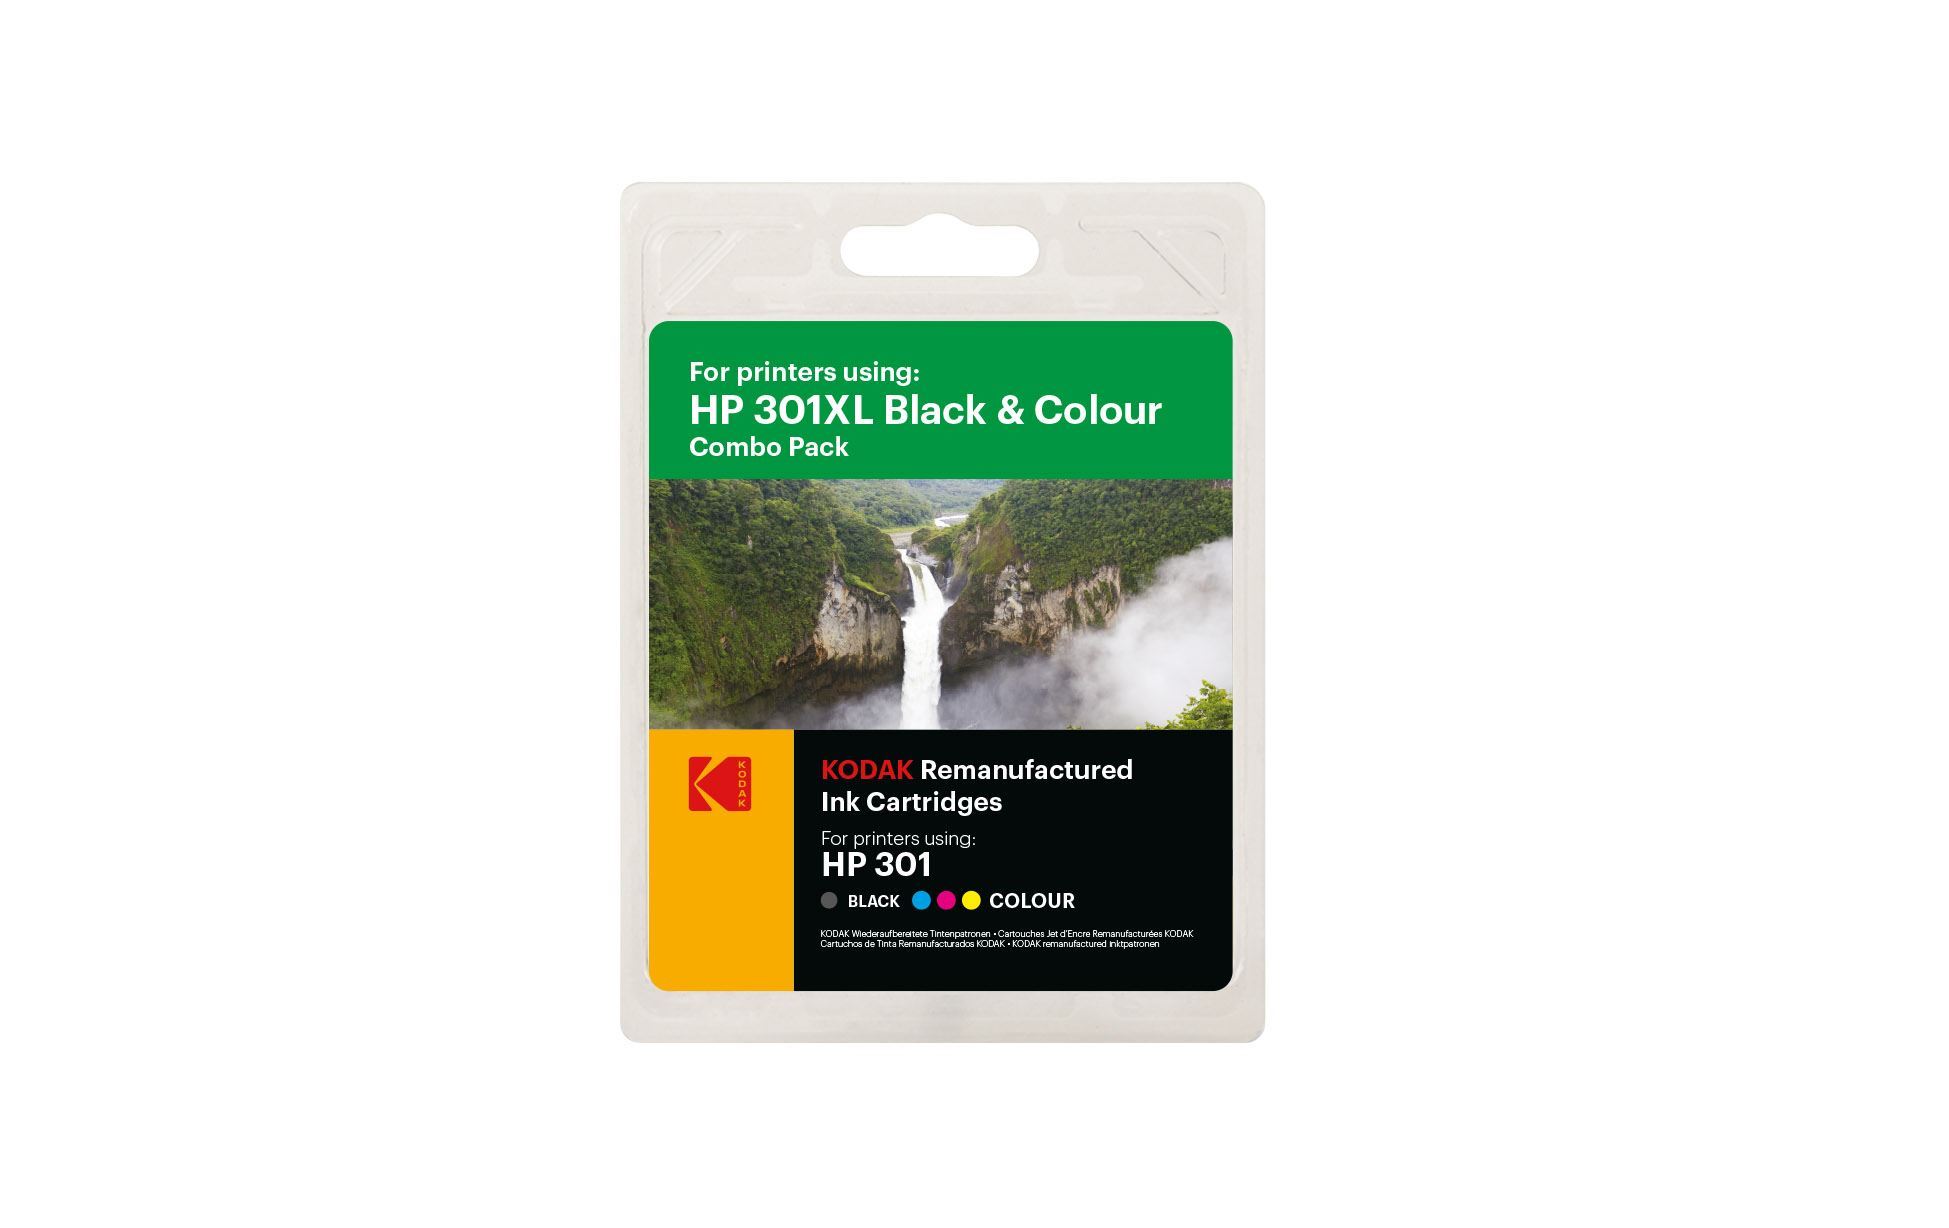 Colour Ink Black | Kodak Replacement 301XL Red Bus & Cartridges Cartridges HP